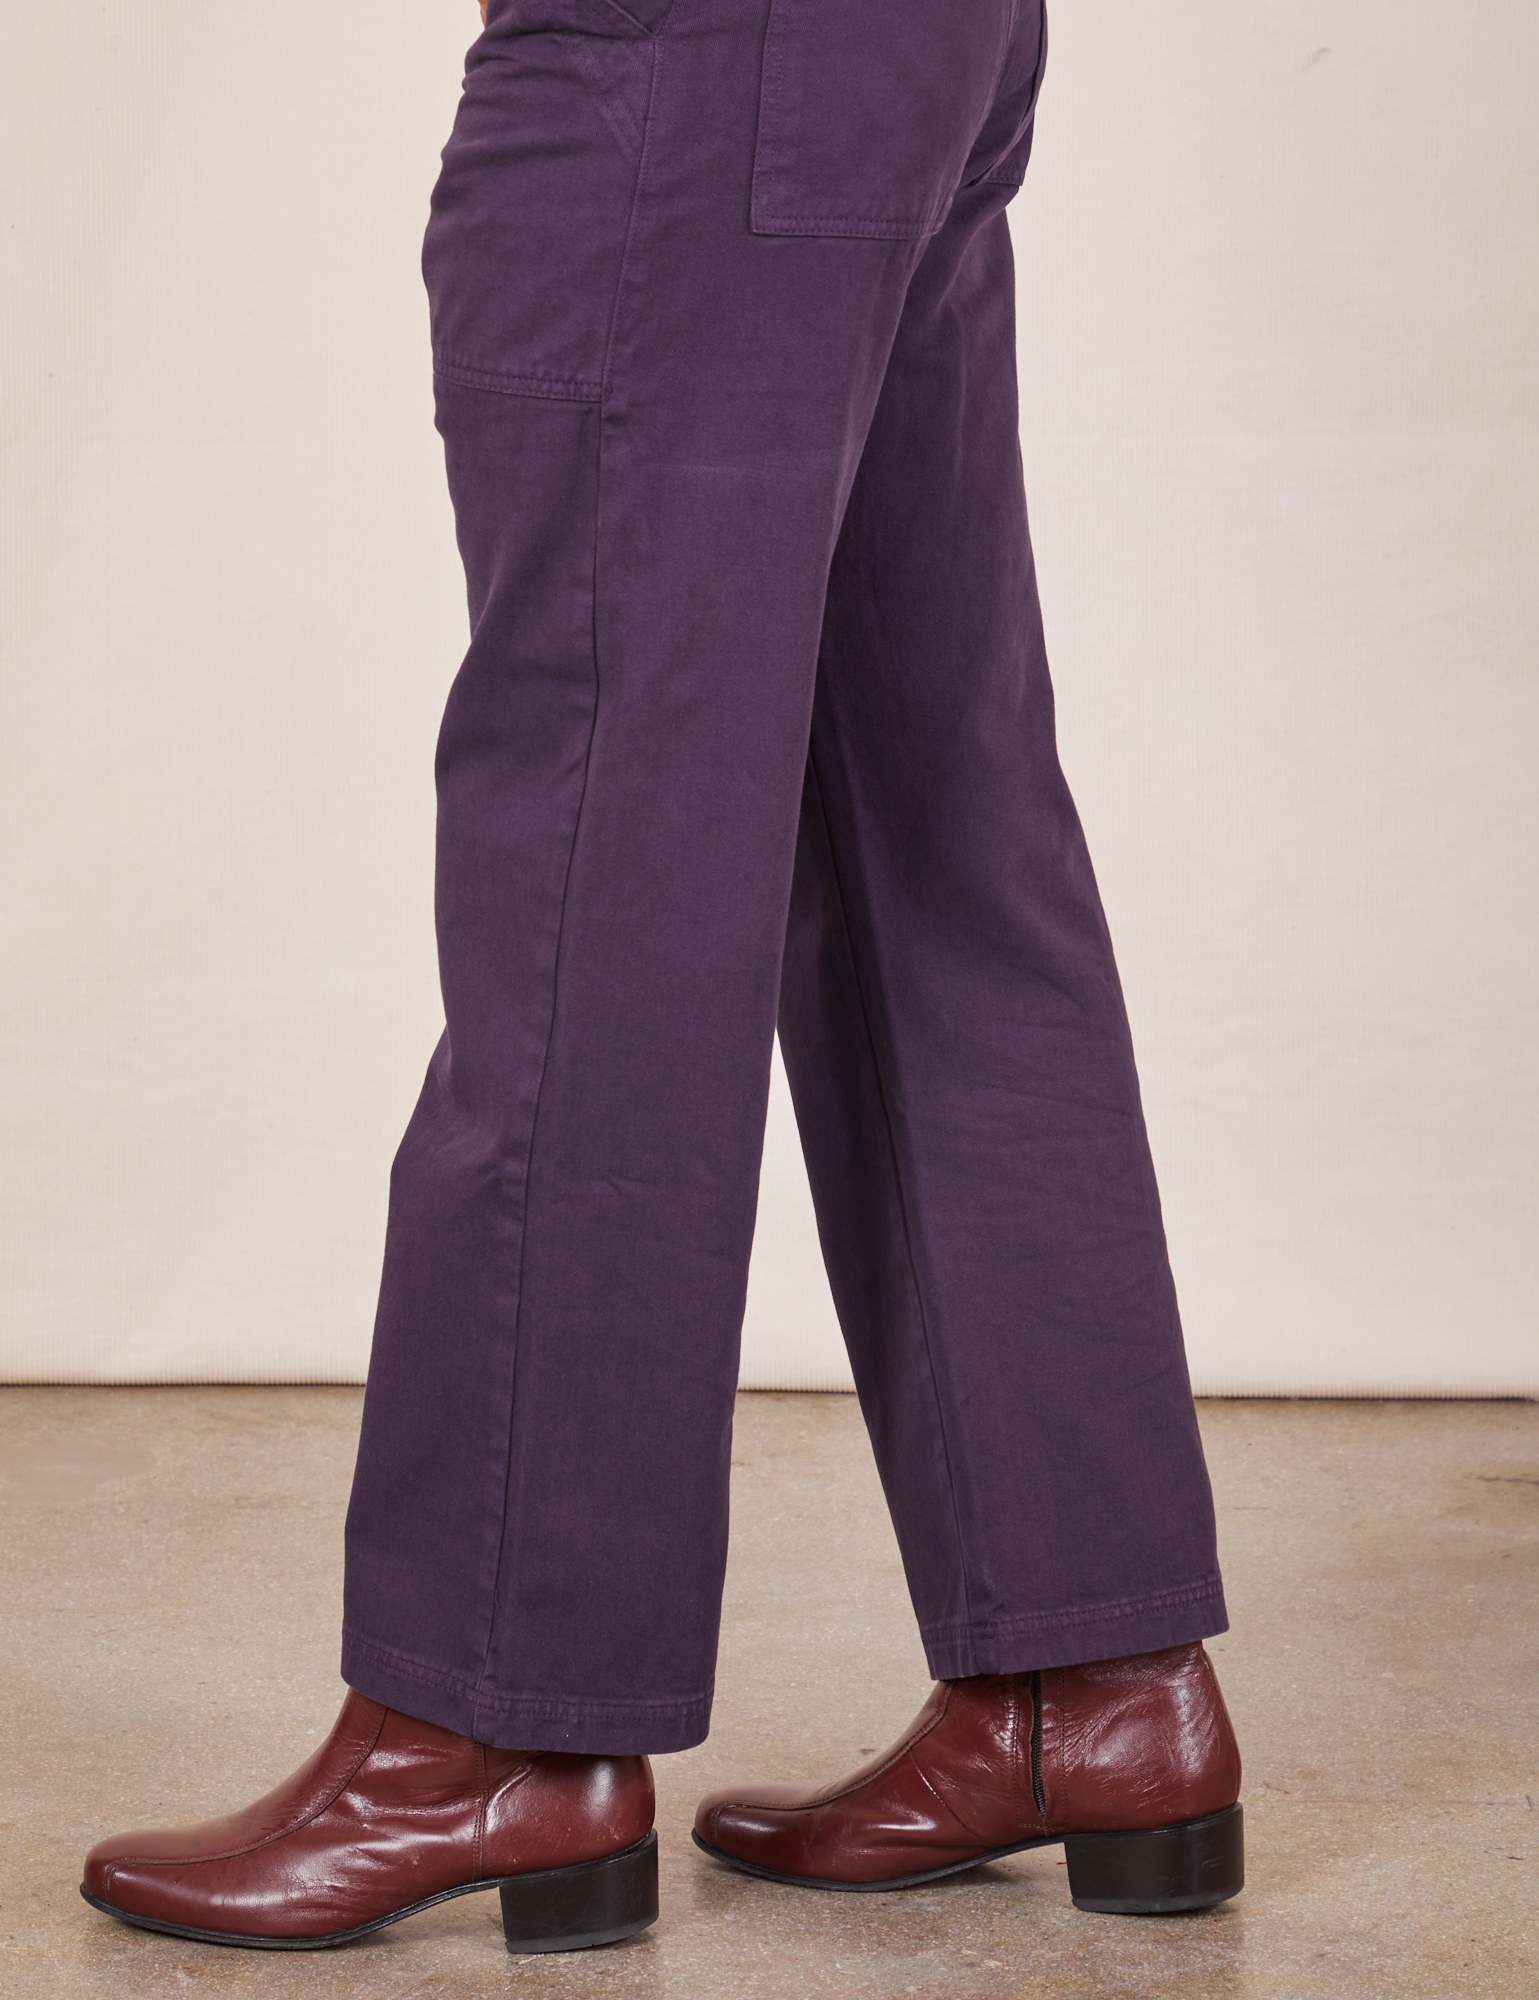 Side view pant leg close up of Work Pants in Nebula Purple worn by Jesse